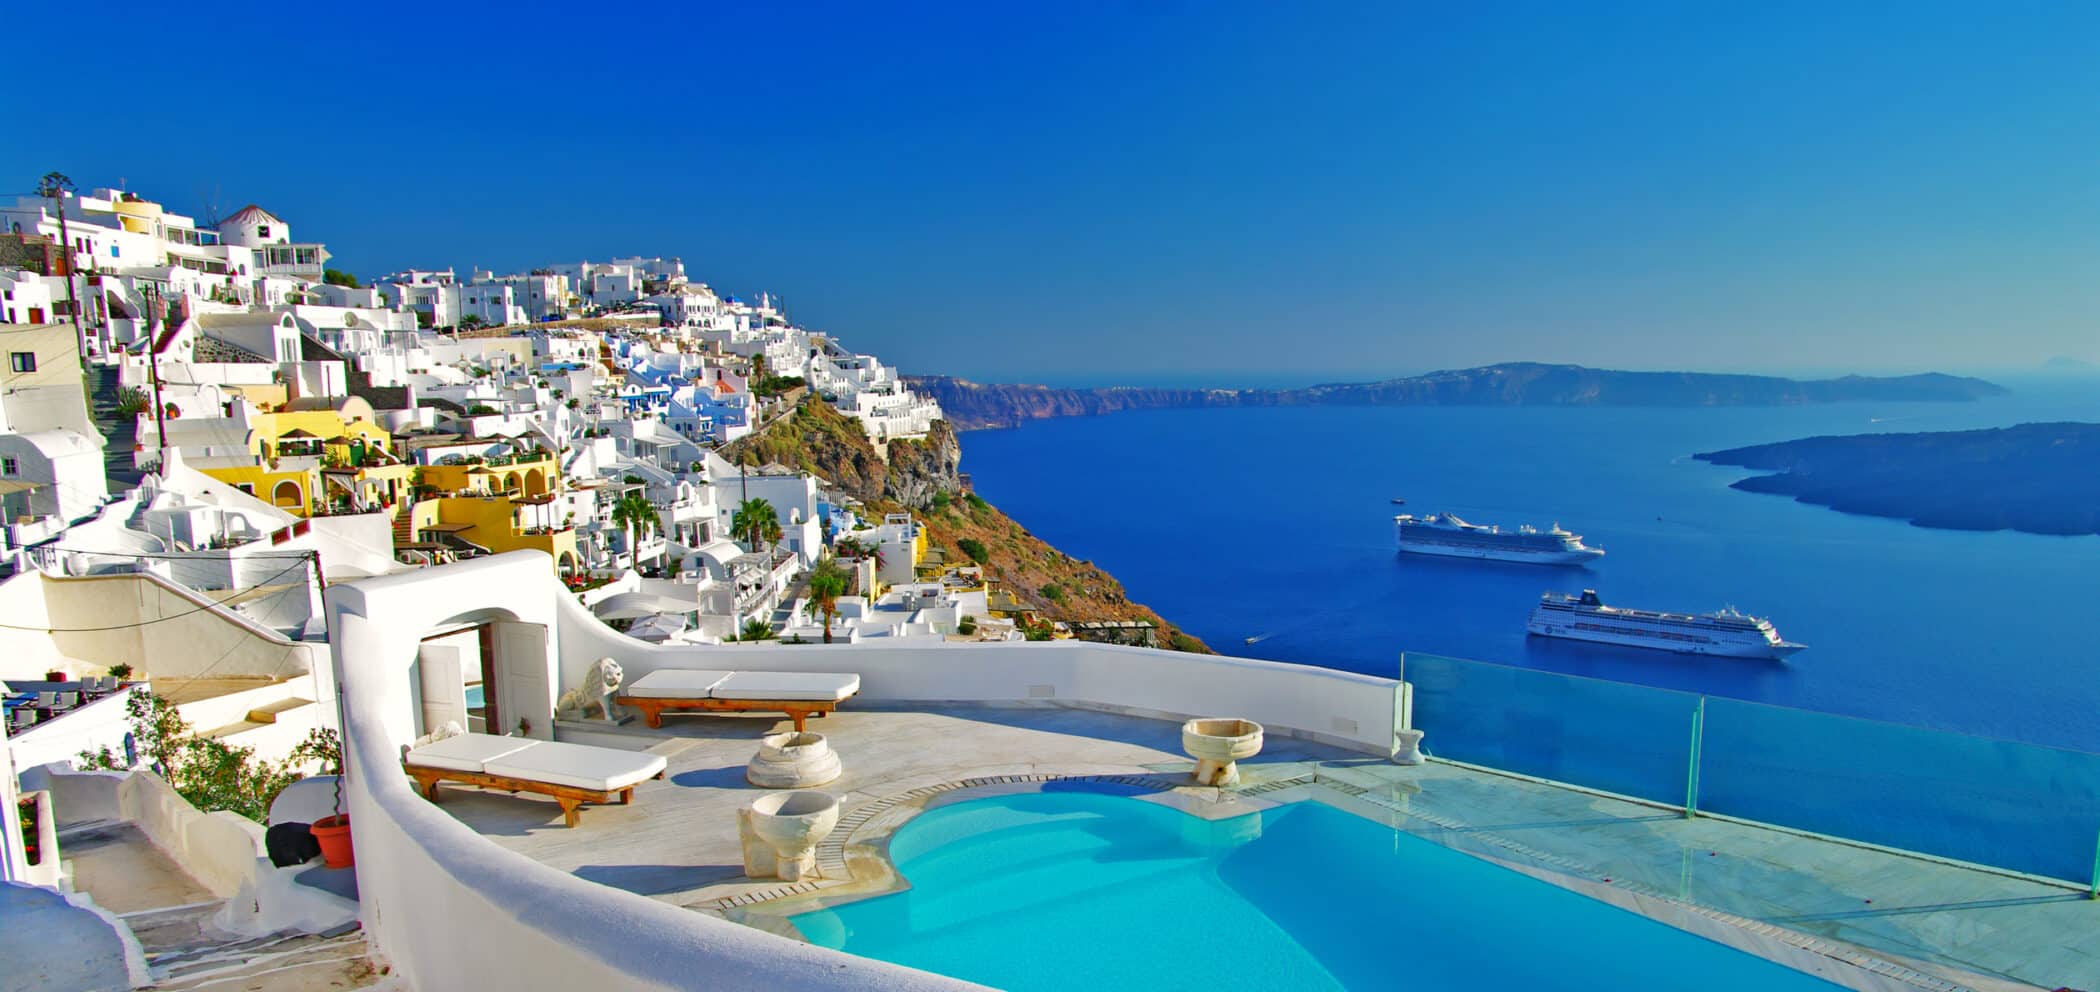 Santorini - græske øer, luxury holidays